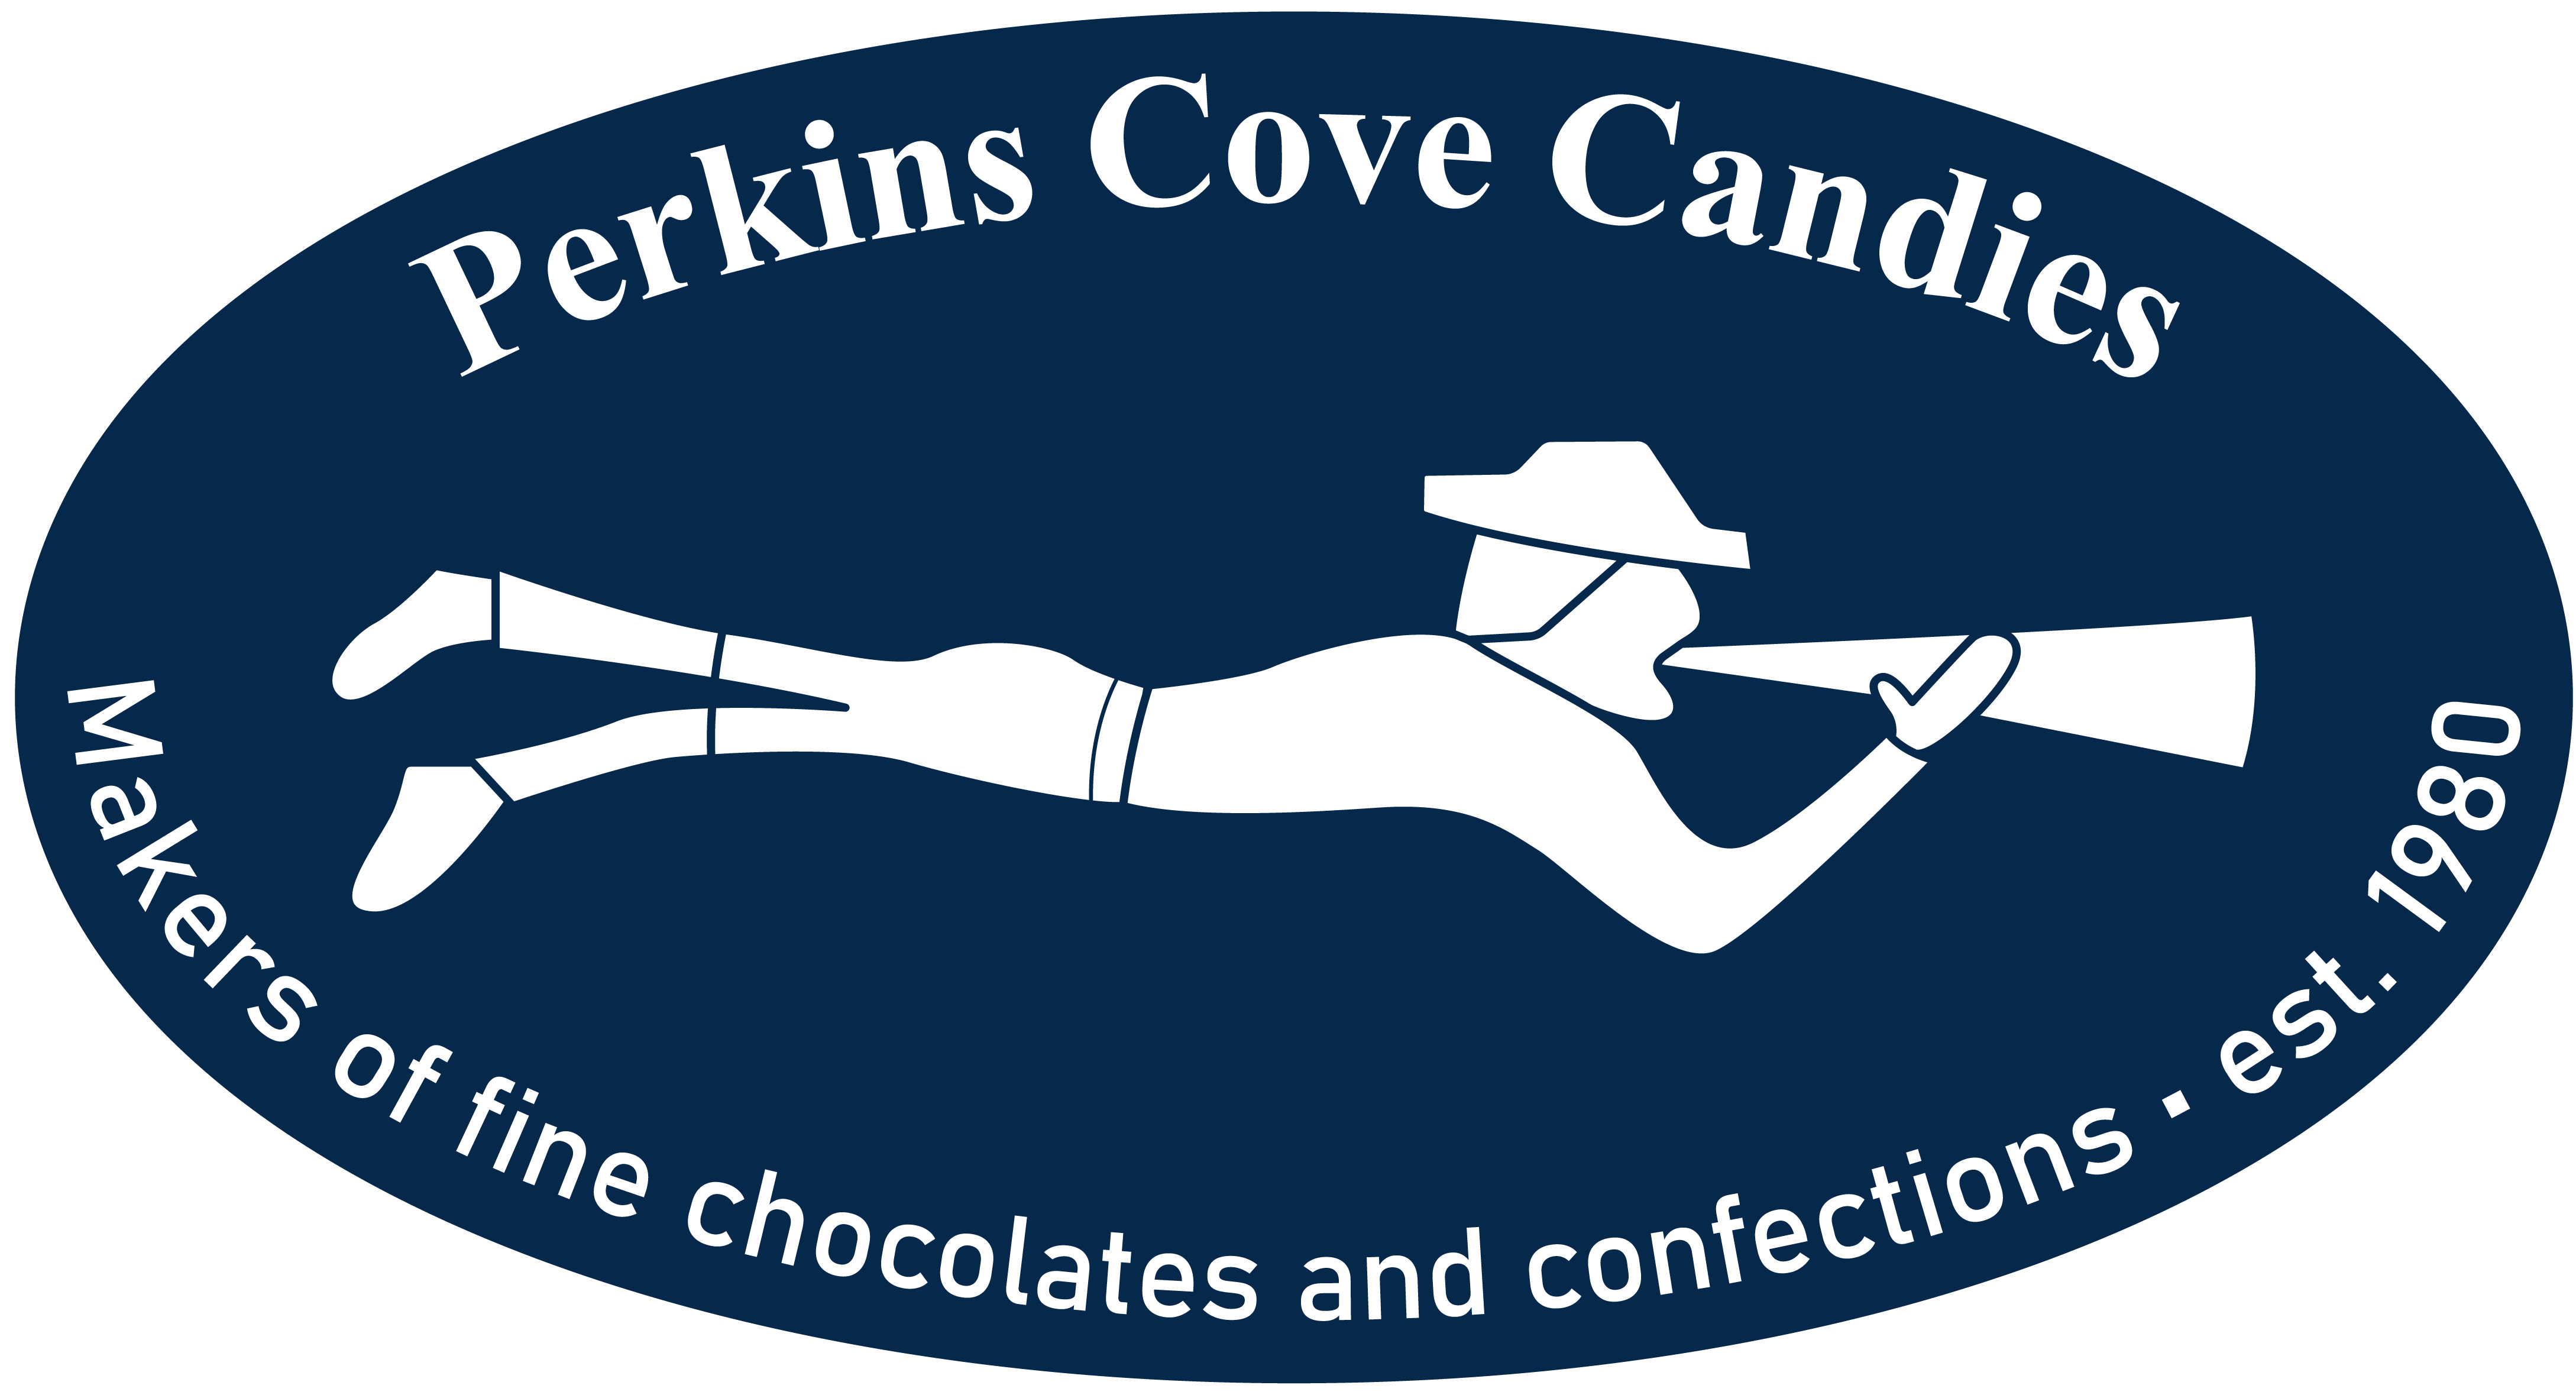 Perkins Cove Candies